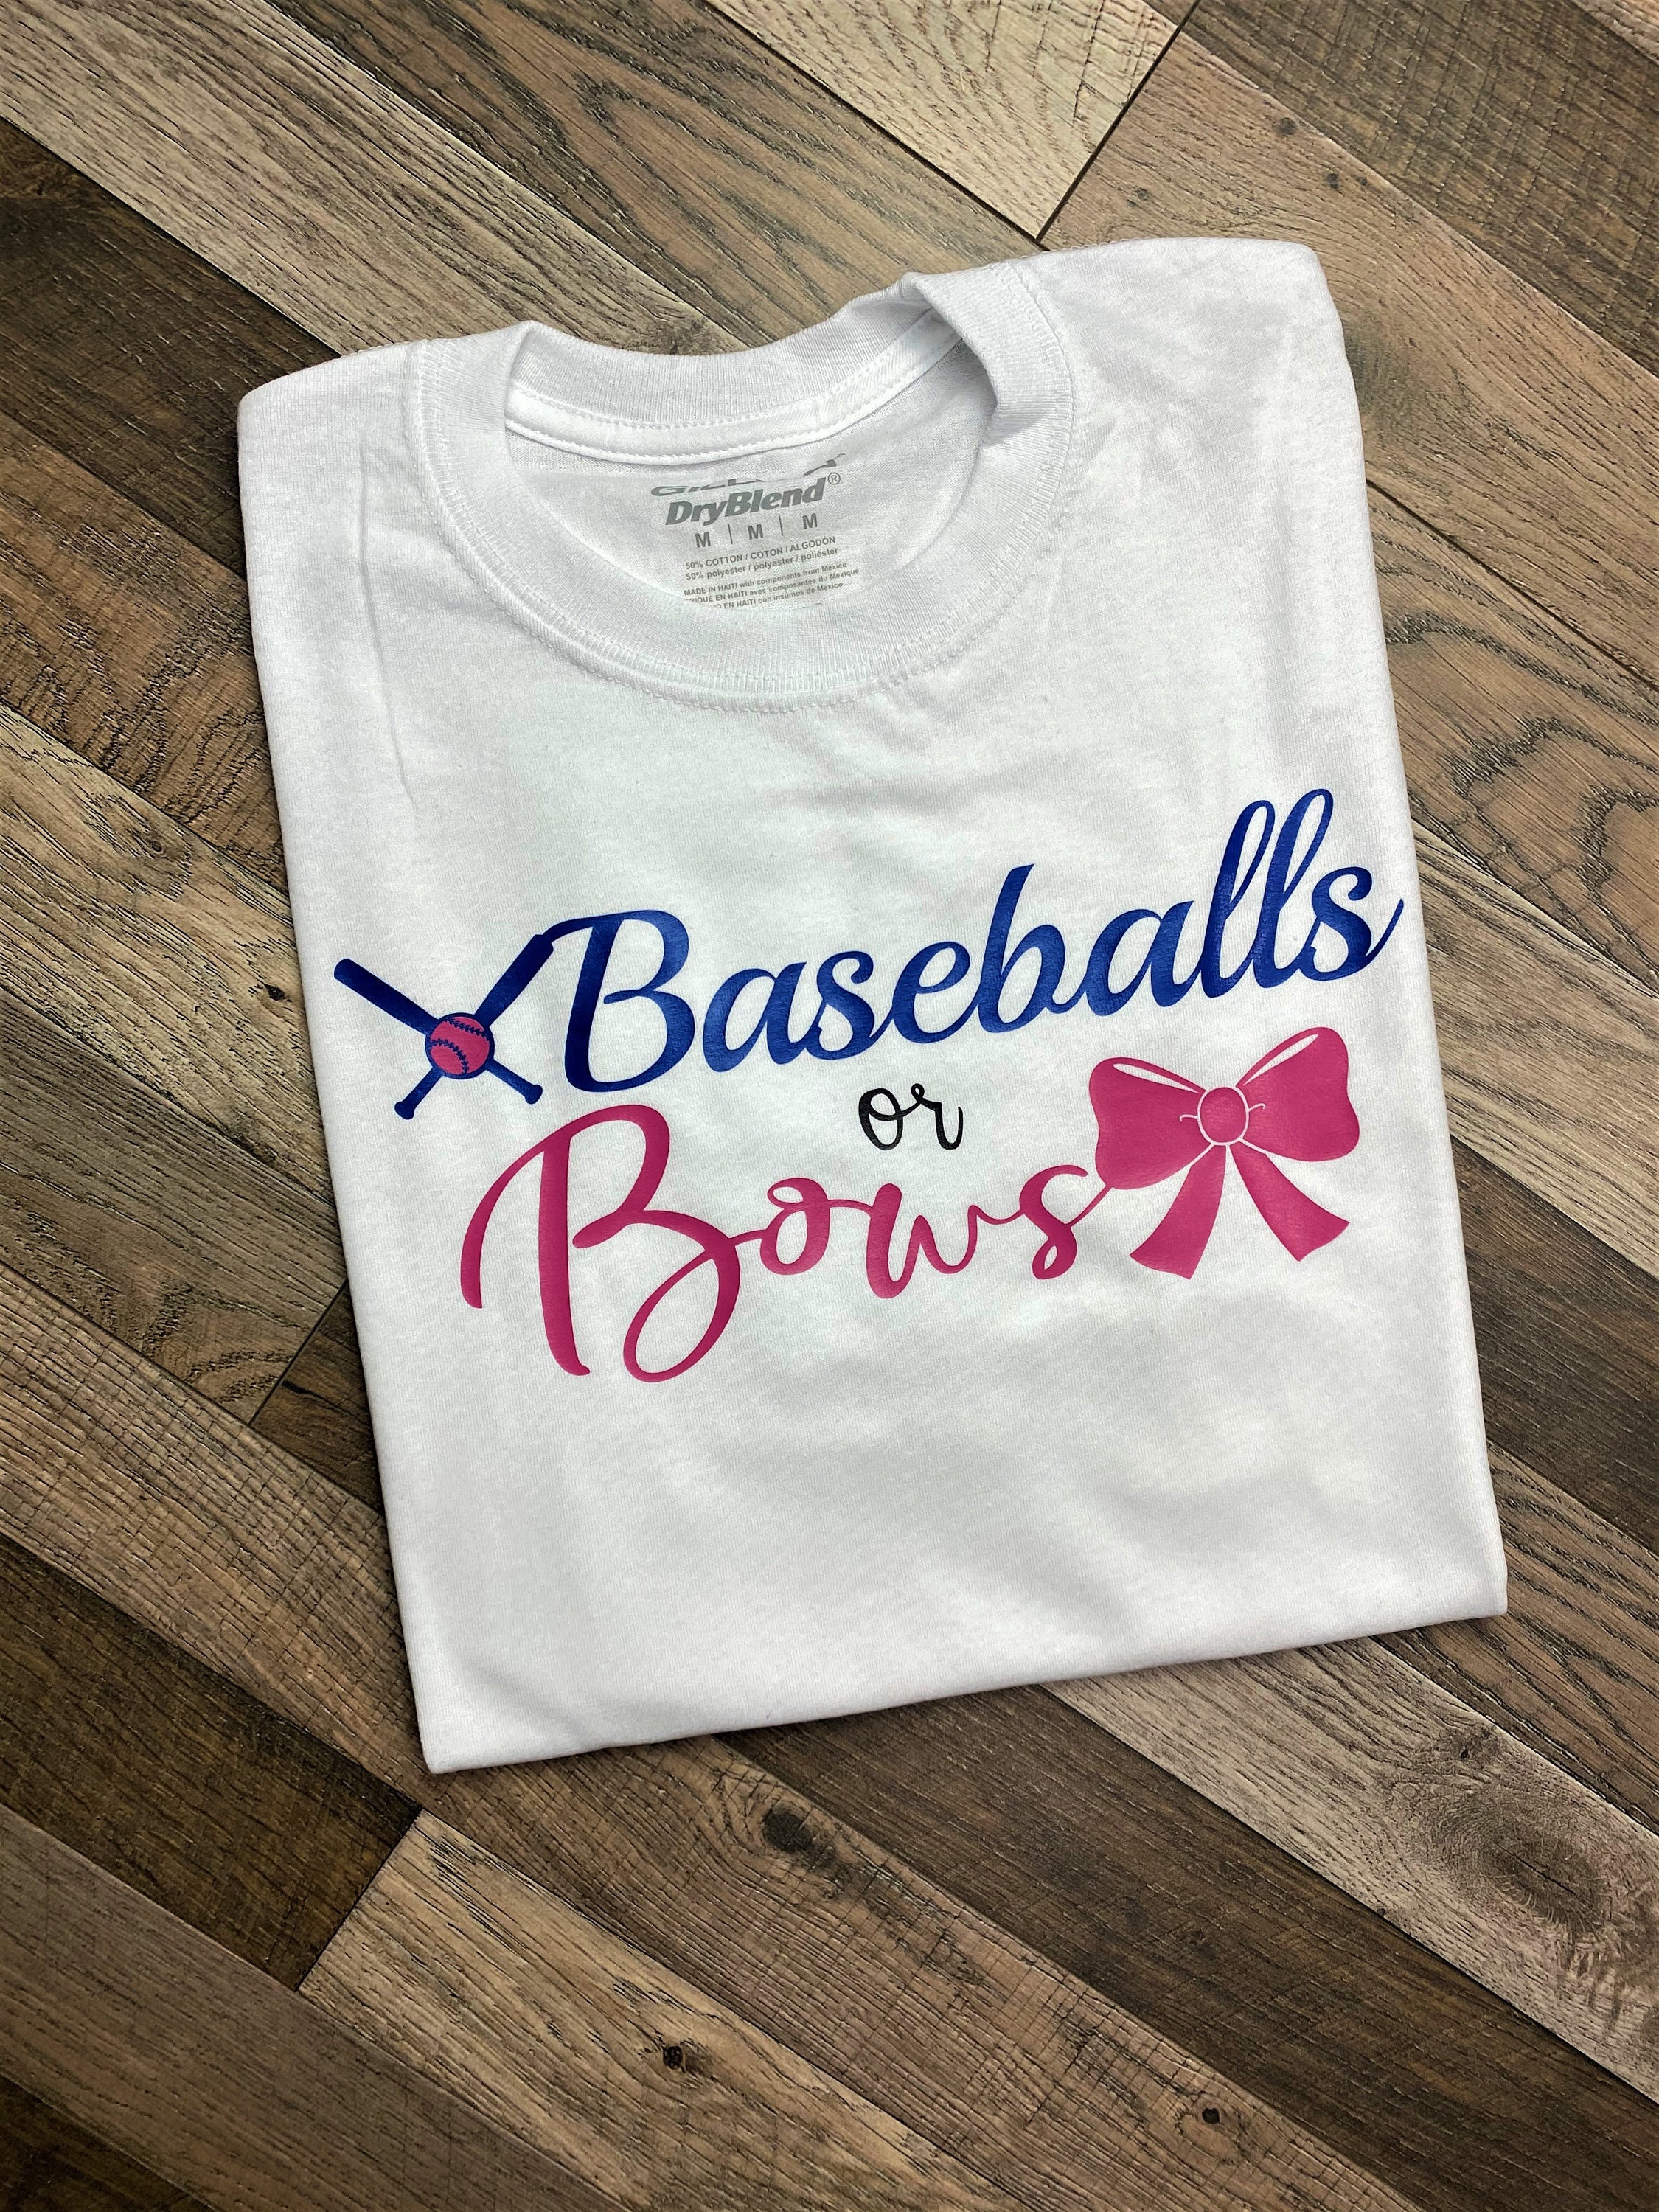 Baseball or Bows Gender Reveal Shirts Baseball Gender Reveal - Etsy